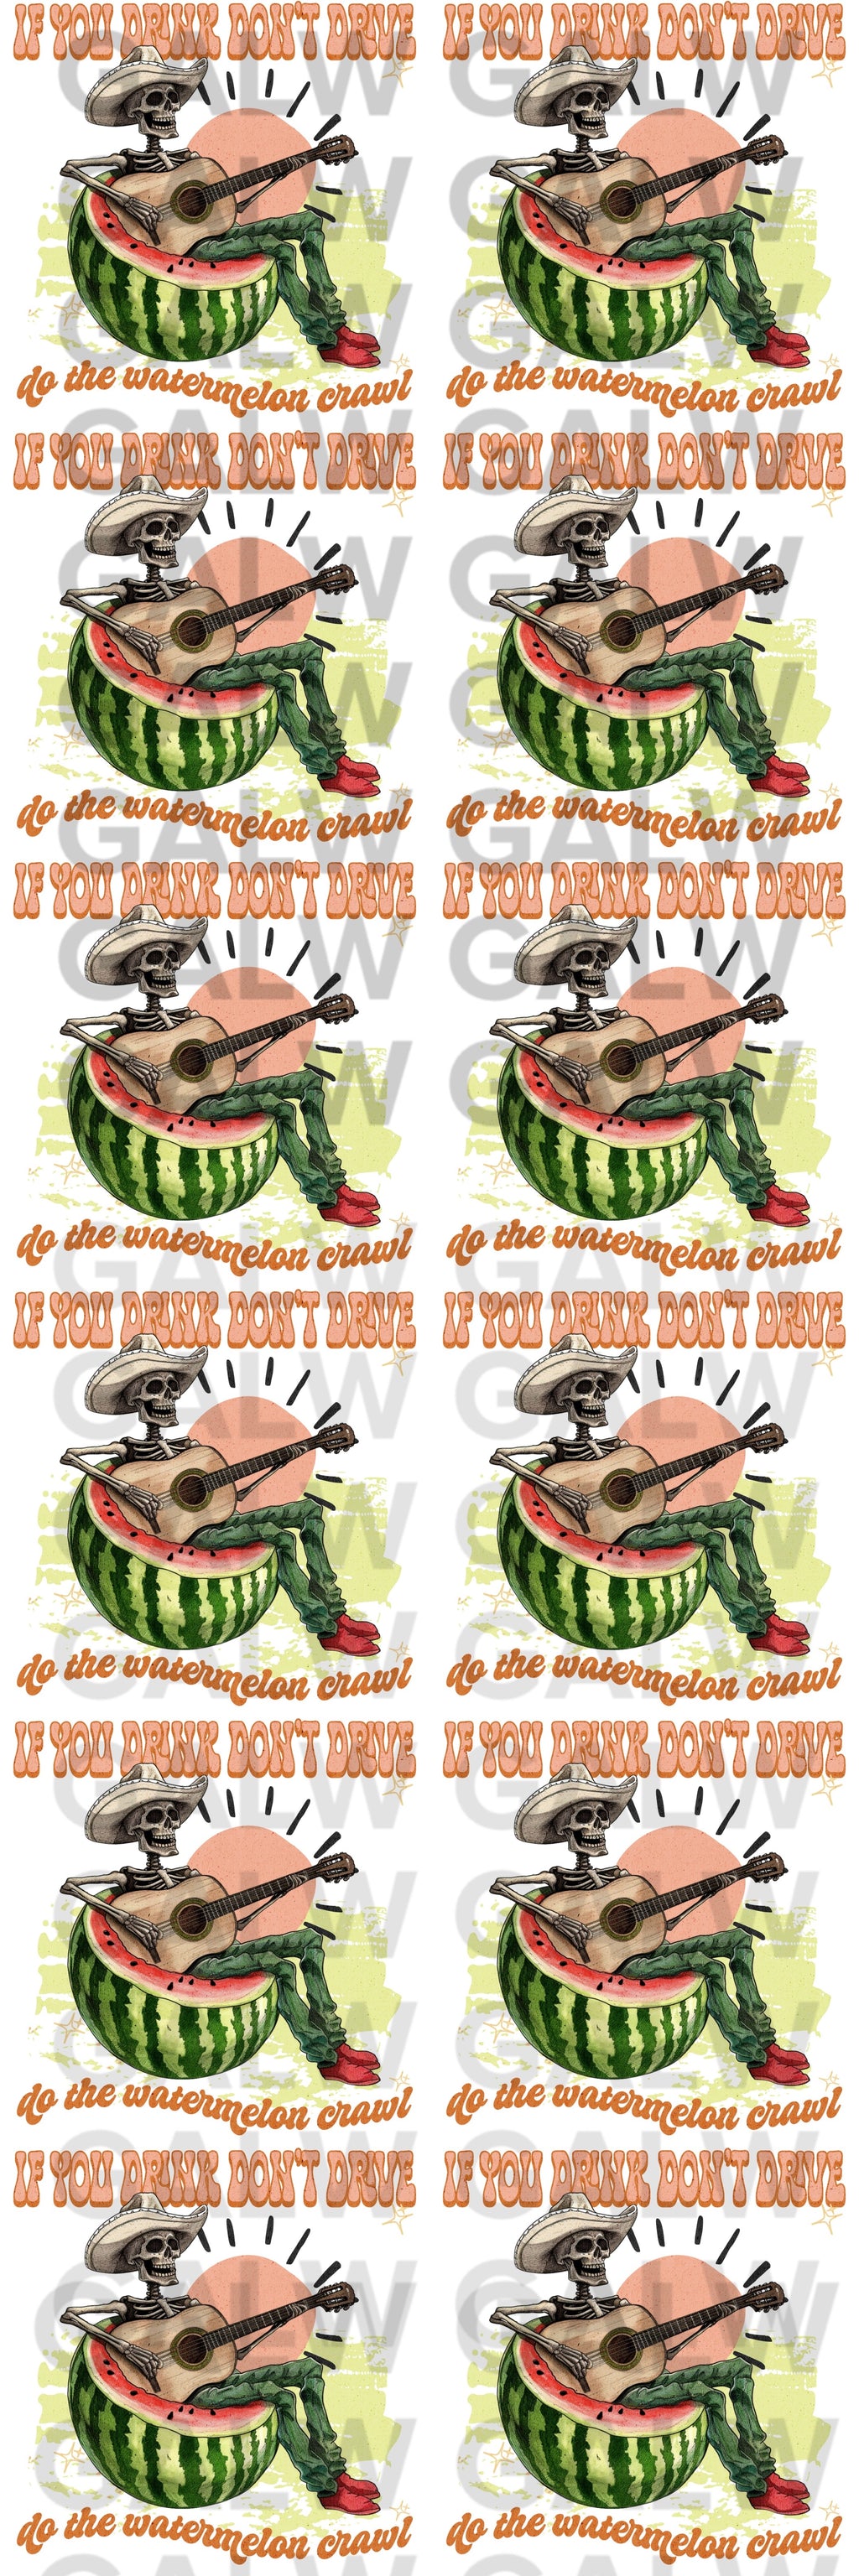 Watermelon Crawl Premade Gang Sheet